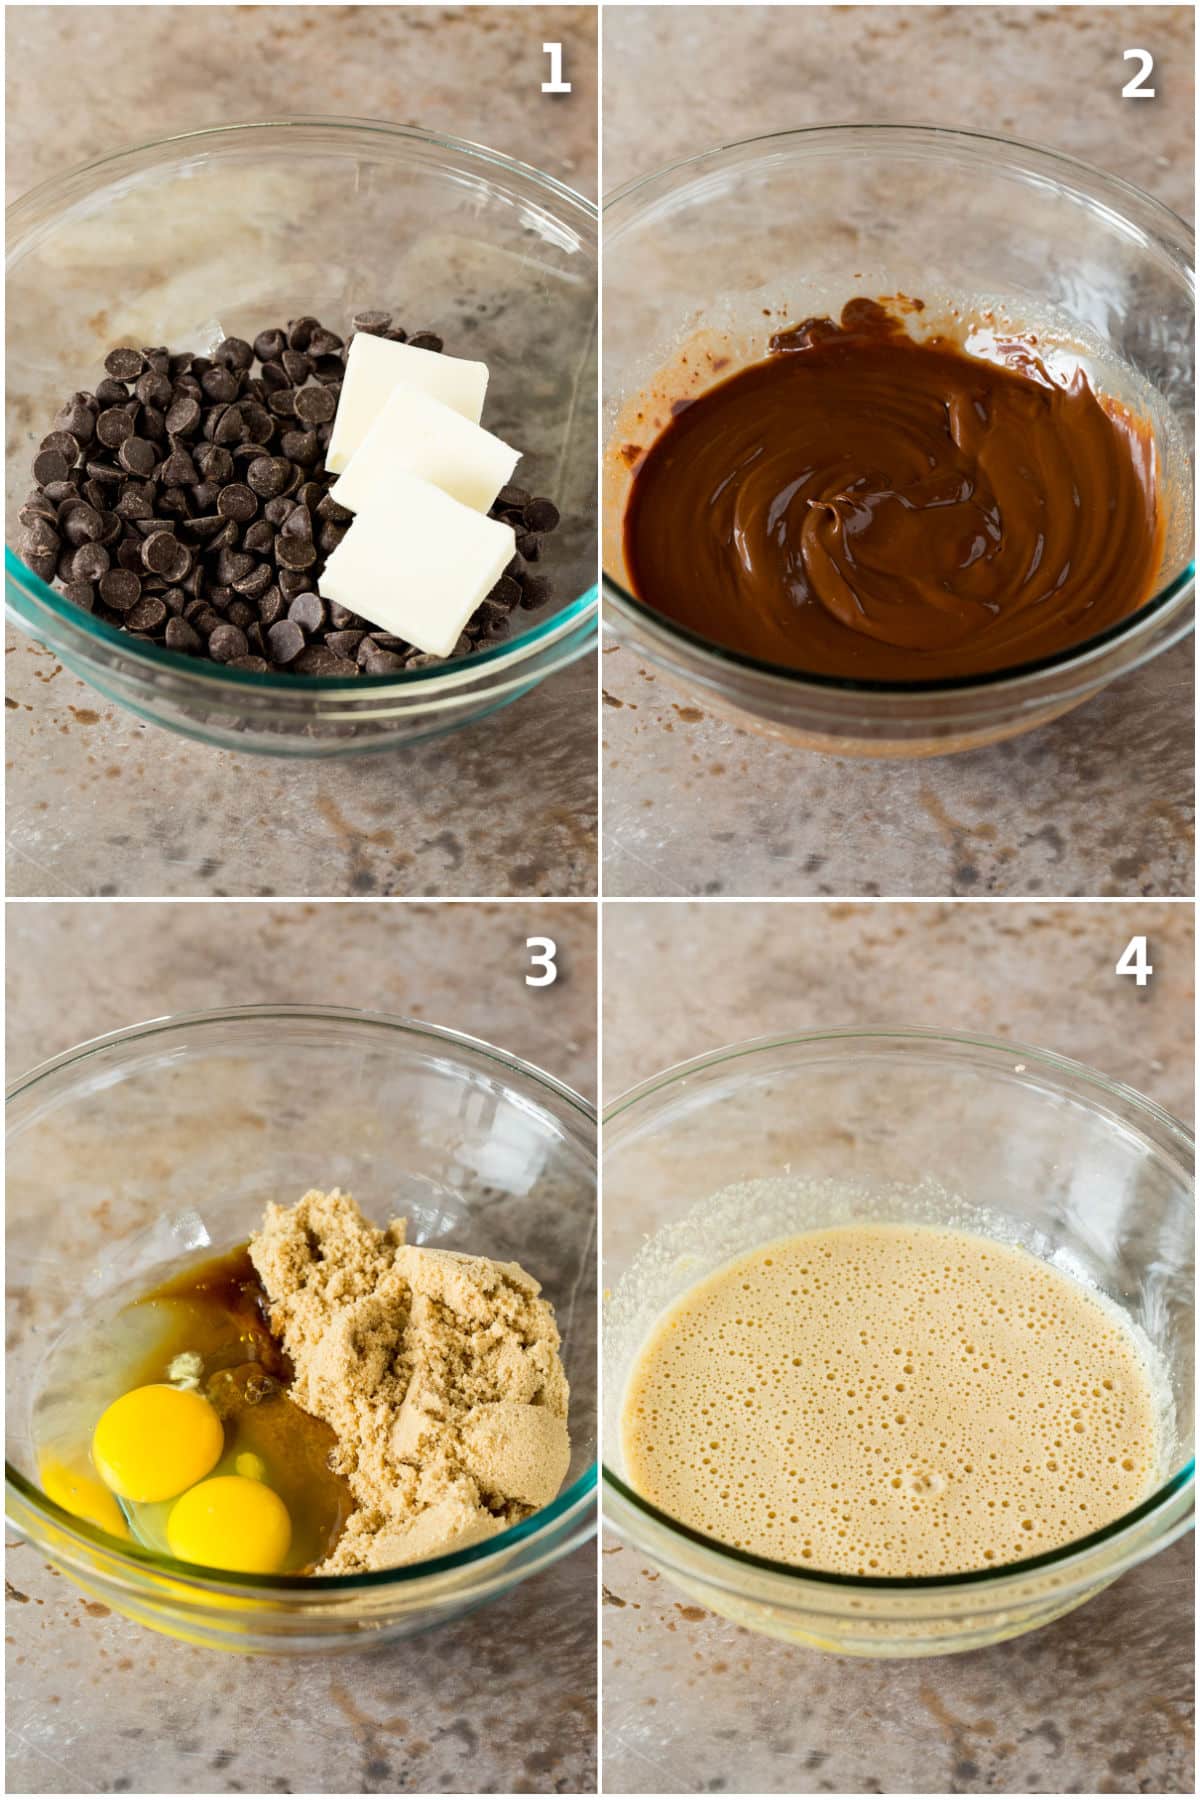 Chocolate cookie batter being prepared.